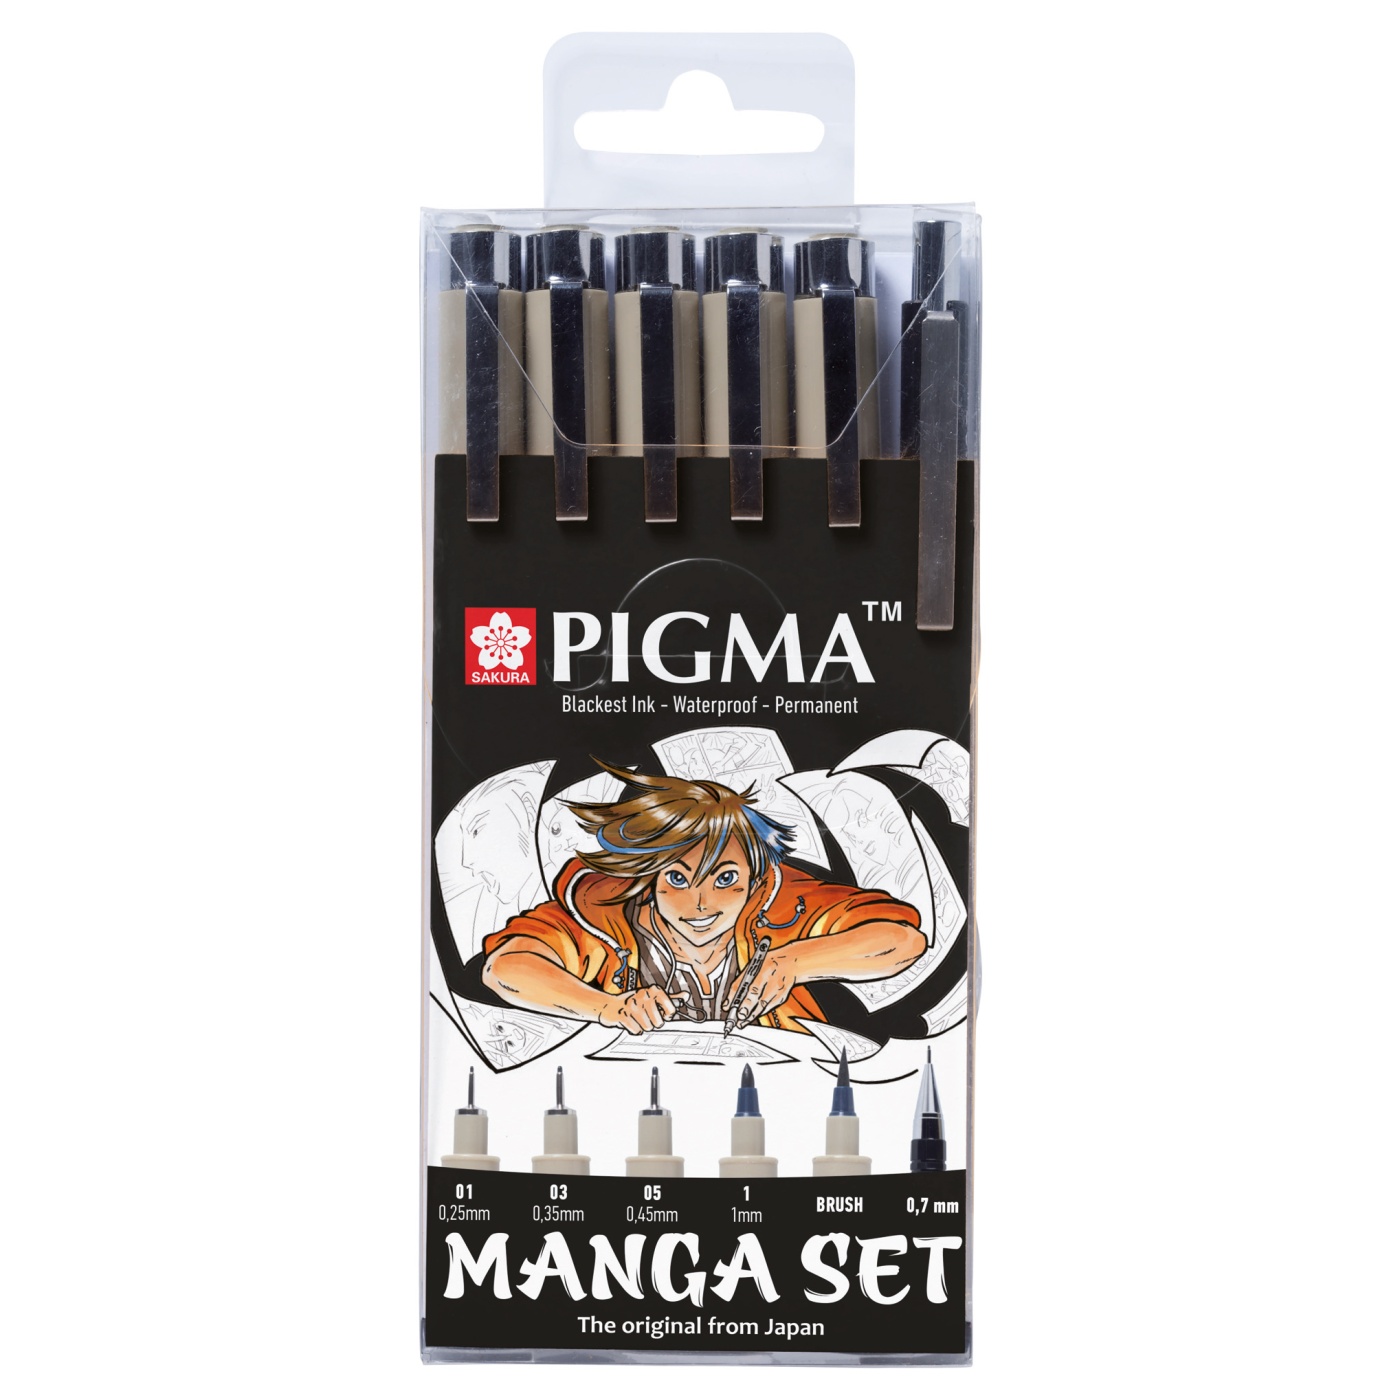 MANGA SAKURA Pigma Tool Set 6# poxsdkman 6 